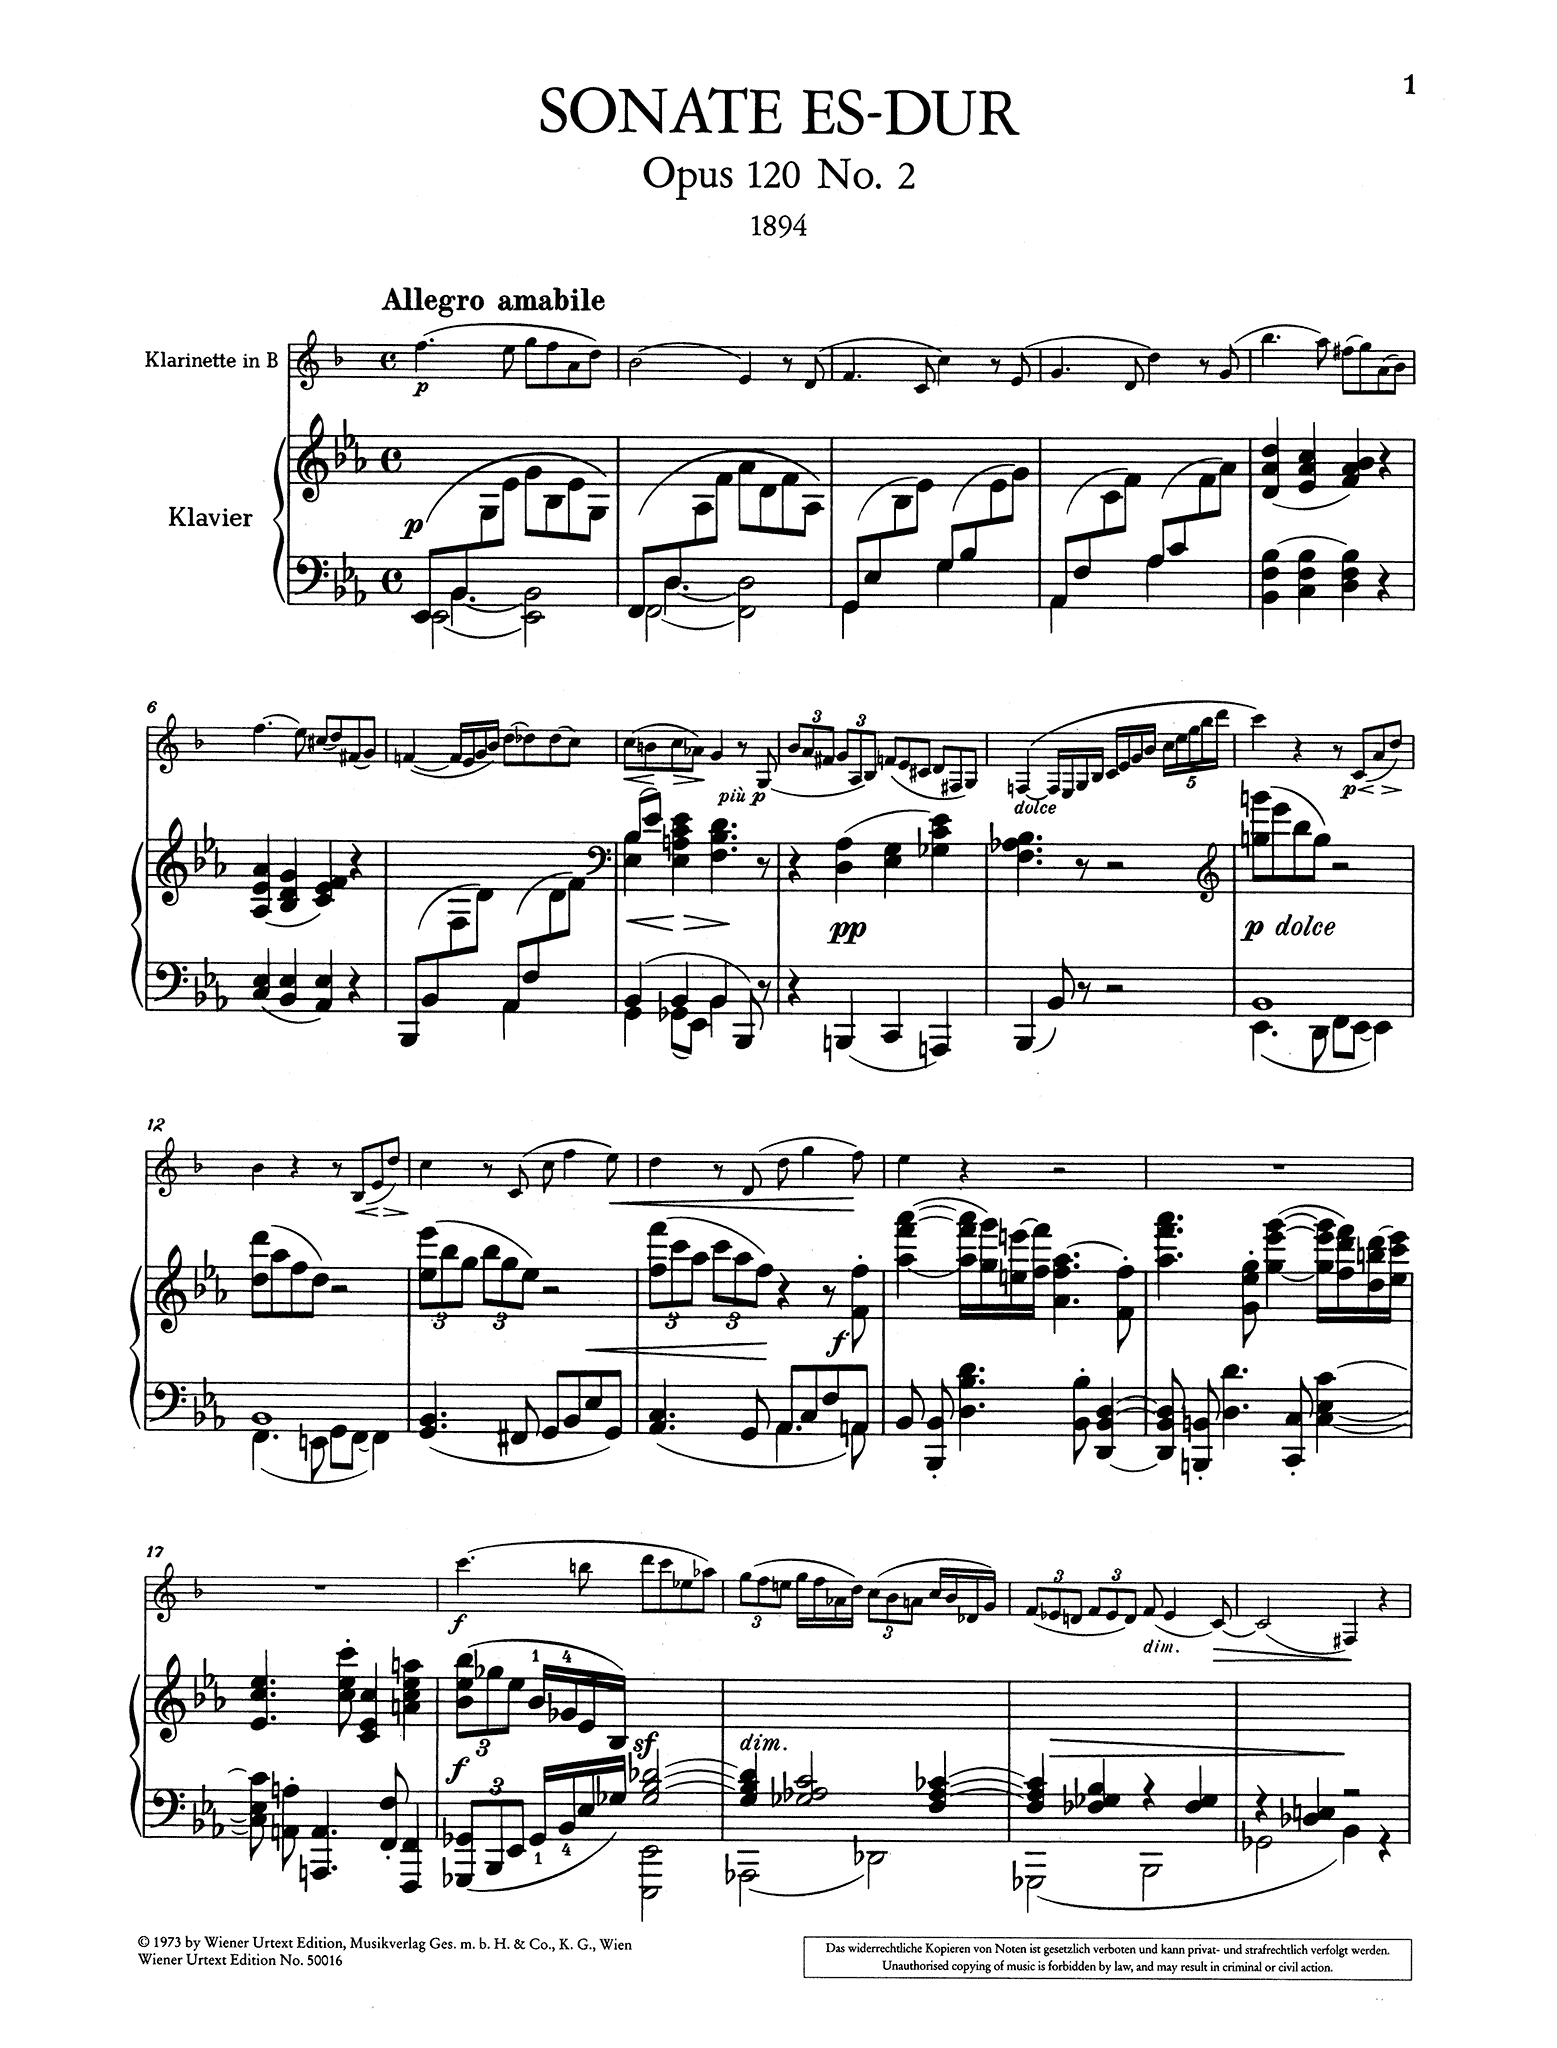 Sonata in E-flat Major, Op. 120 No. 2 - Movement 1